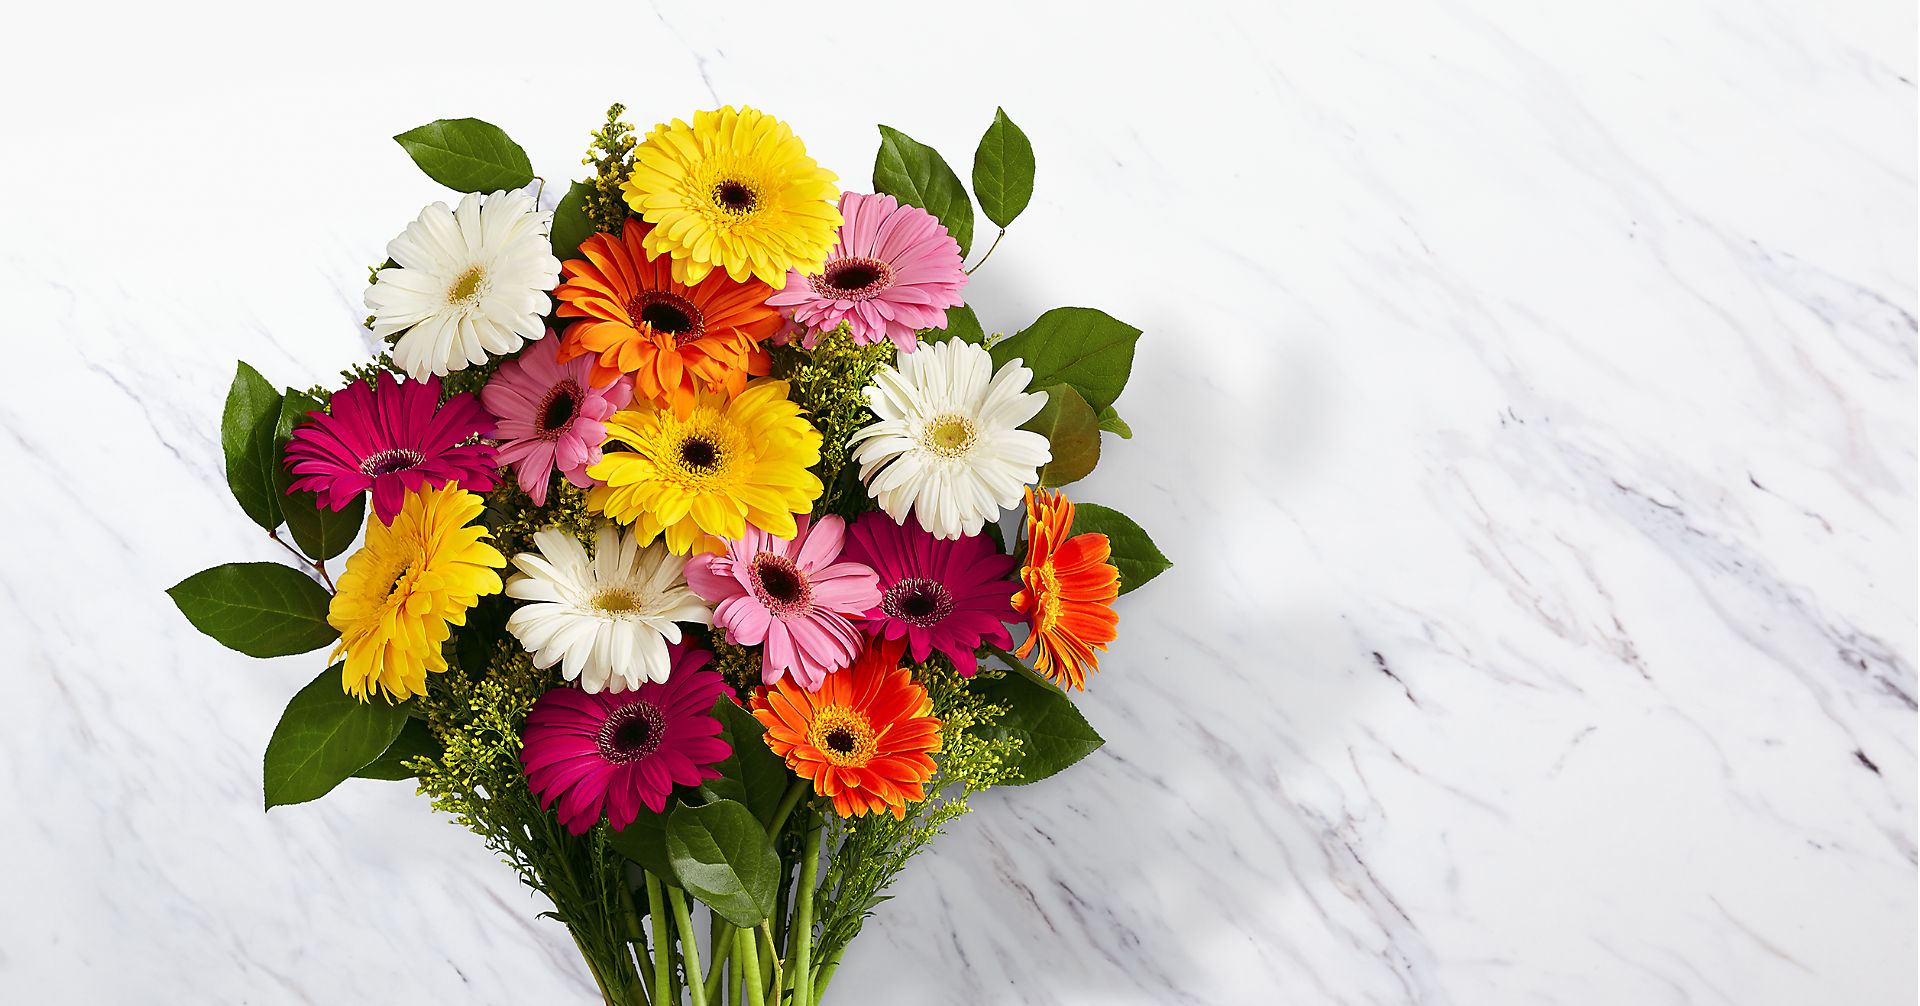 Best Gerbera Flower Arrangements for Special Occasions